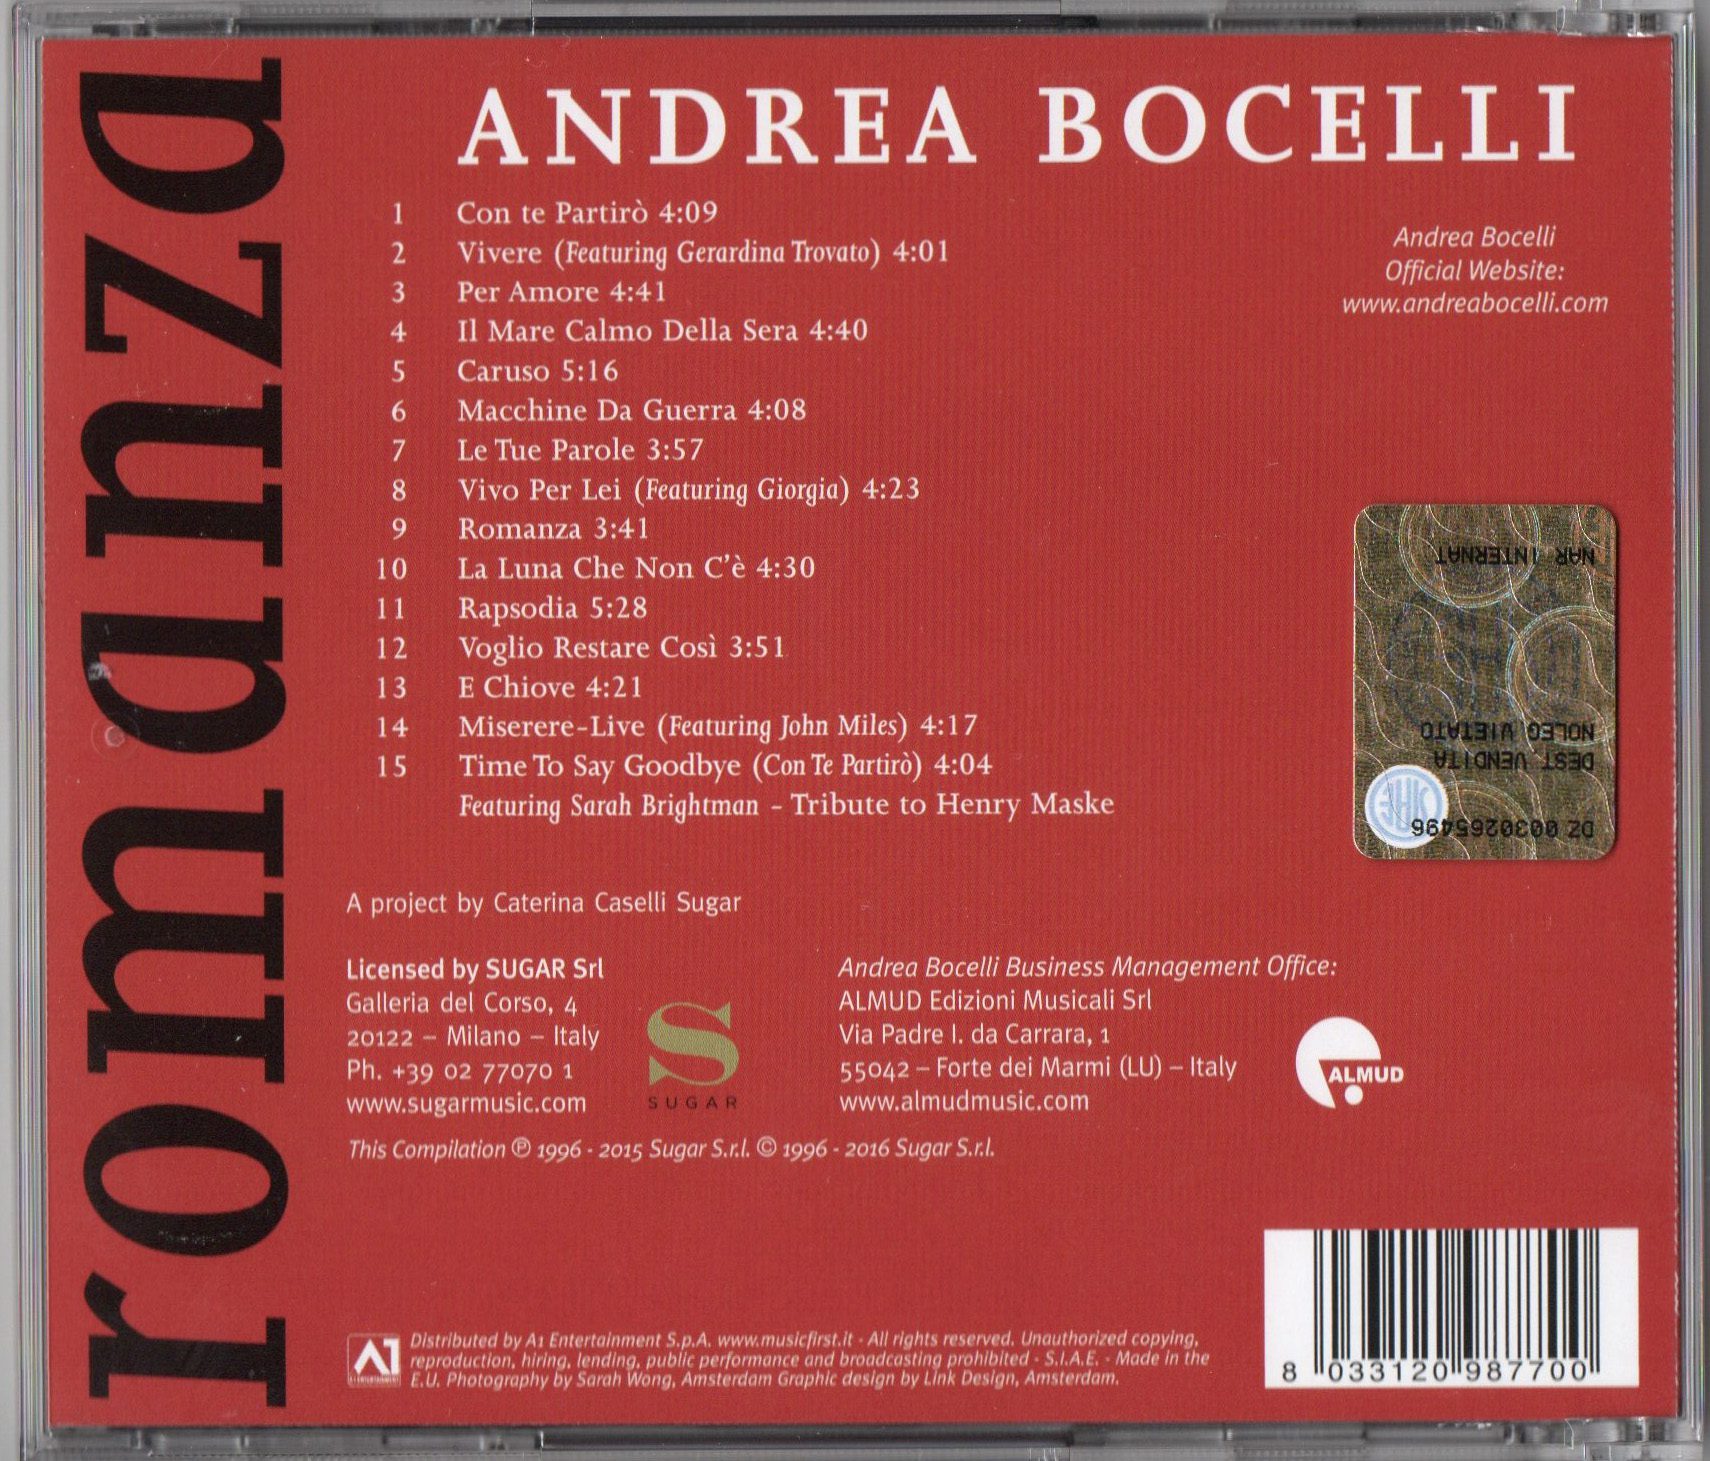 Andrea Bocelli Albums